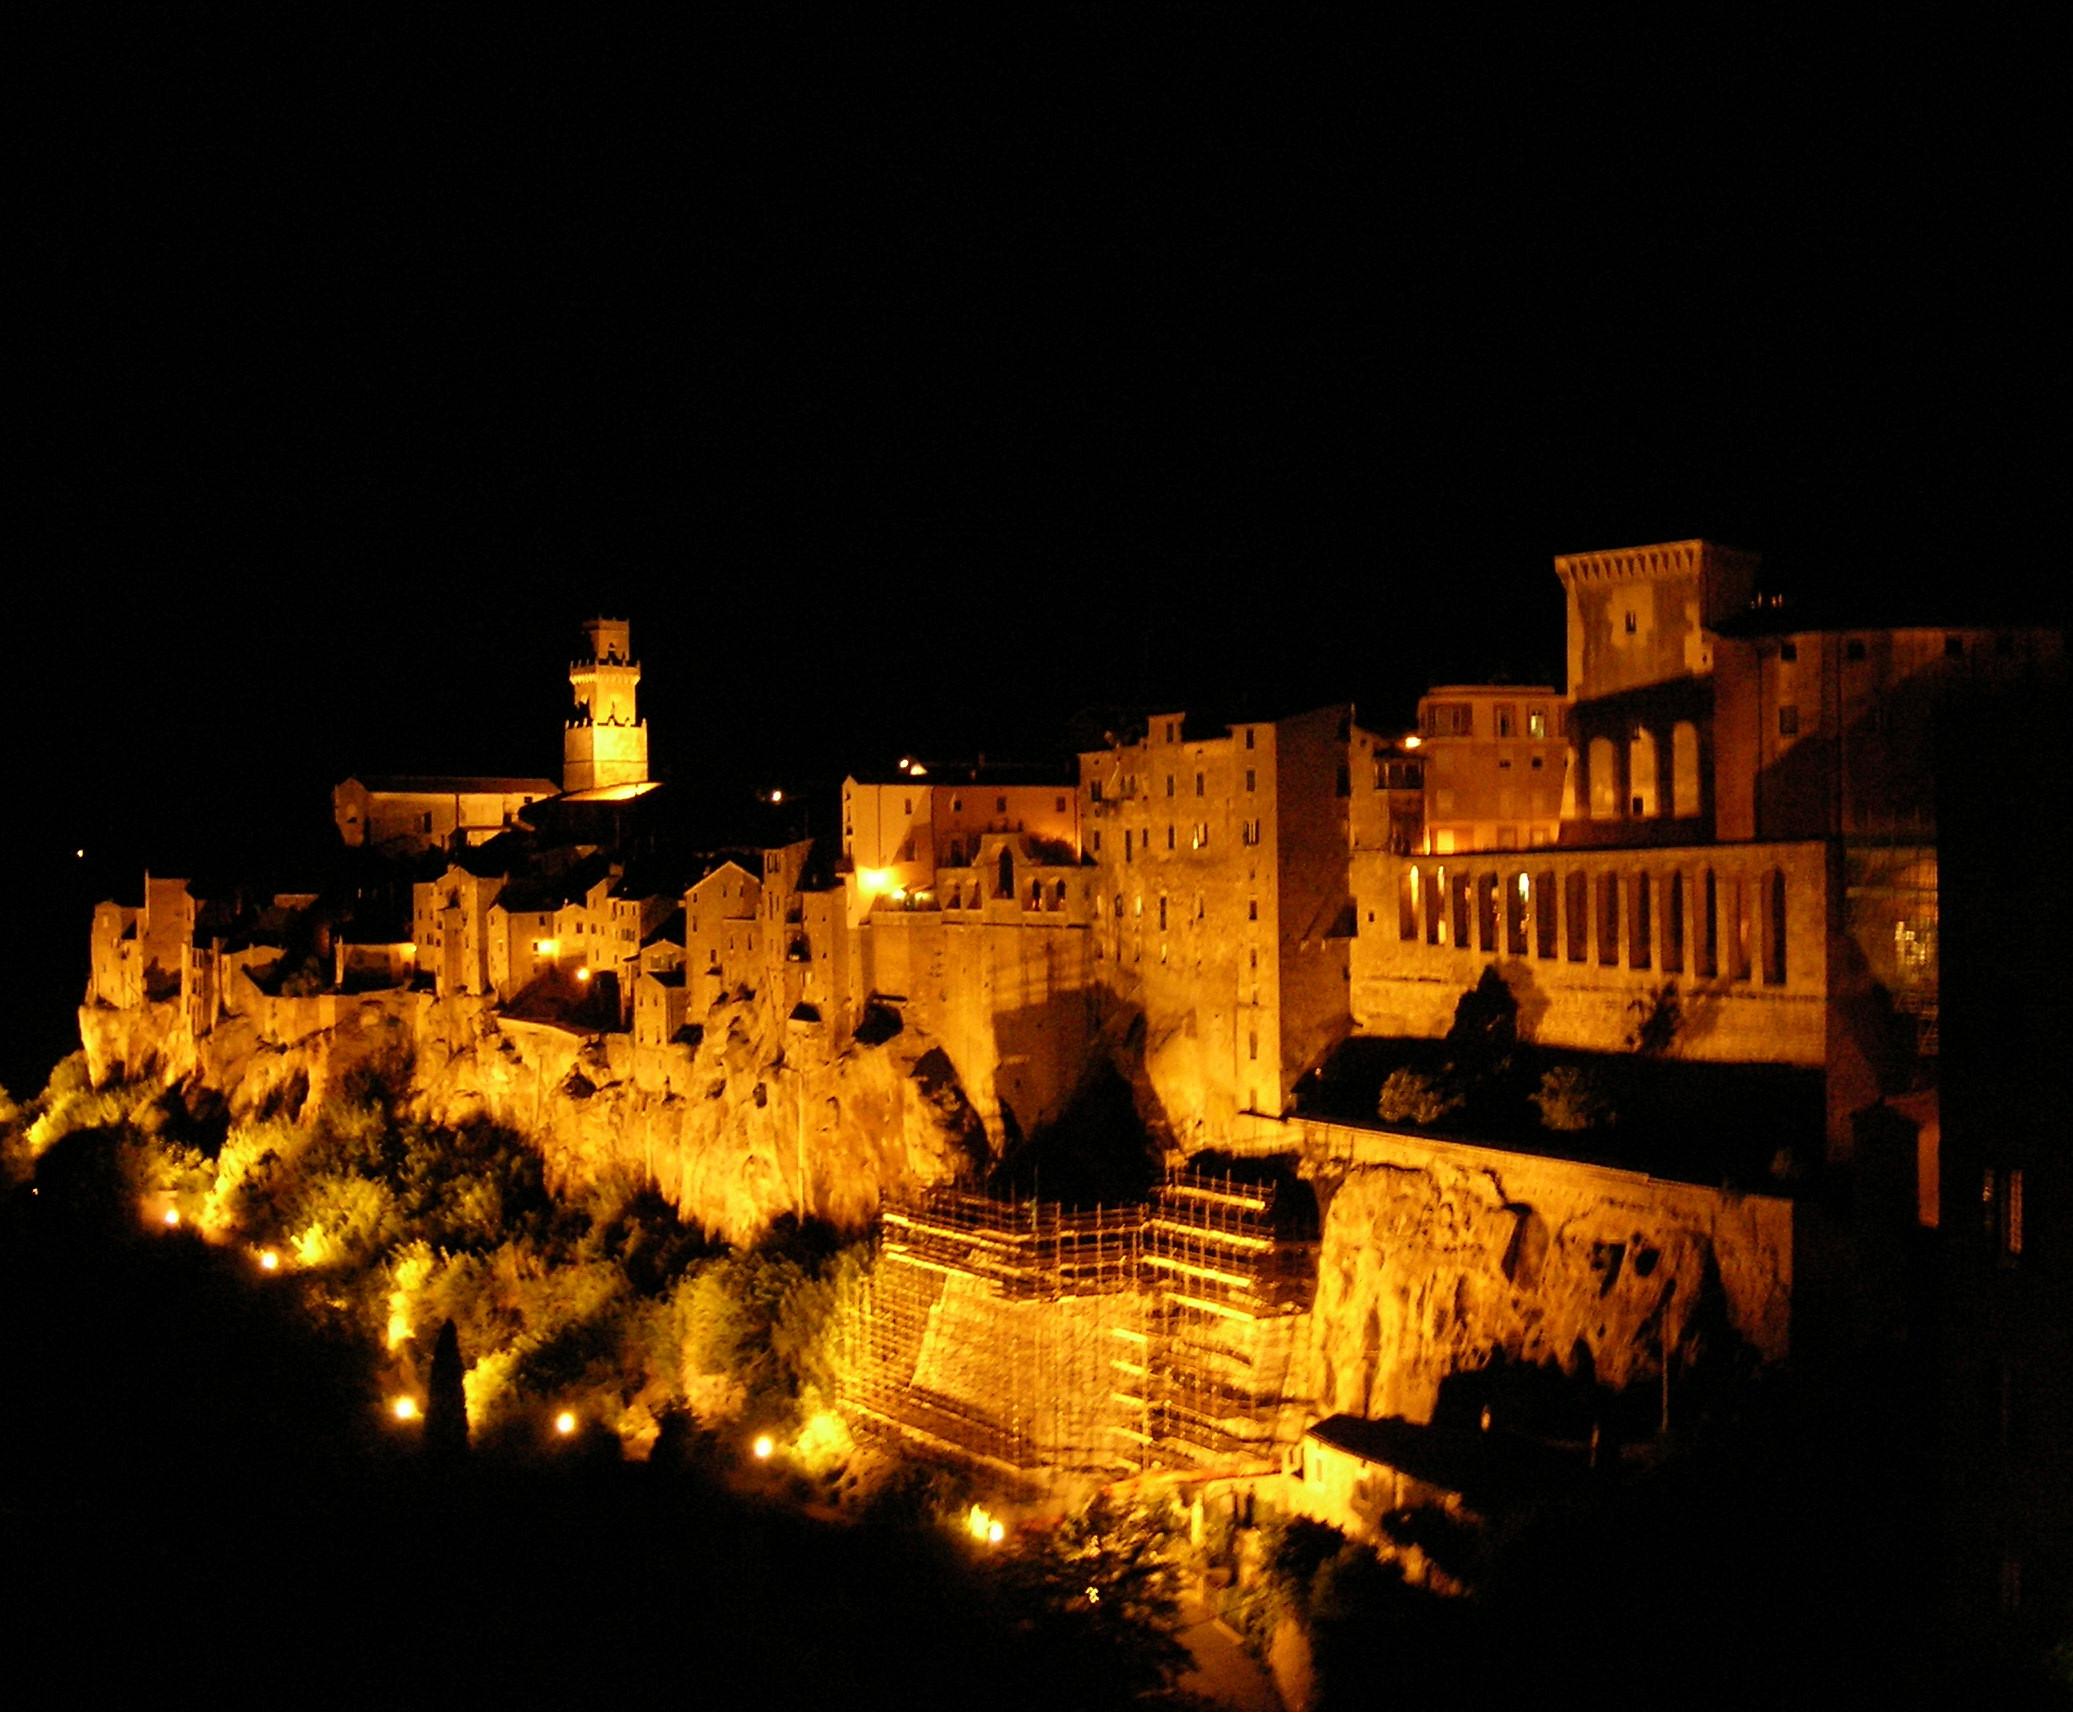 Pitigliano, Italy, at night